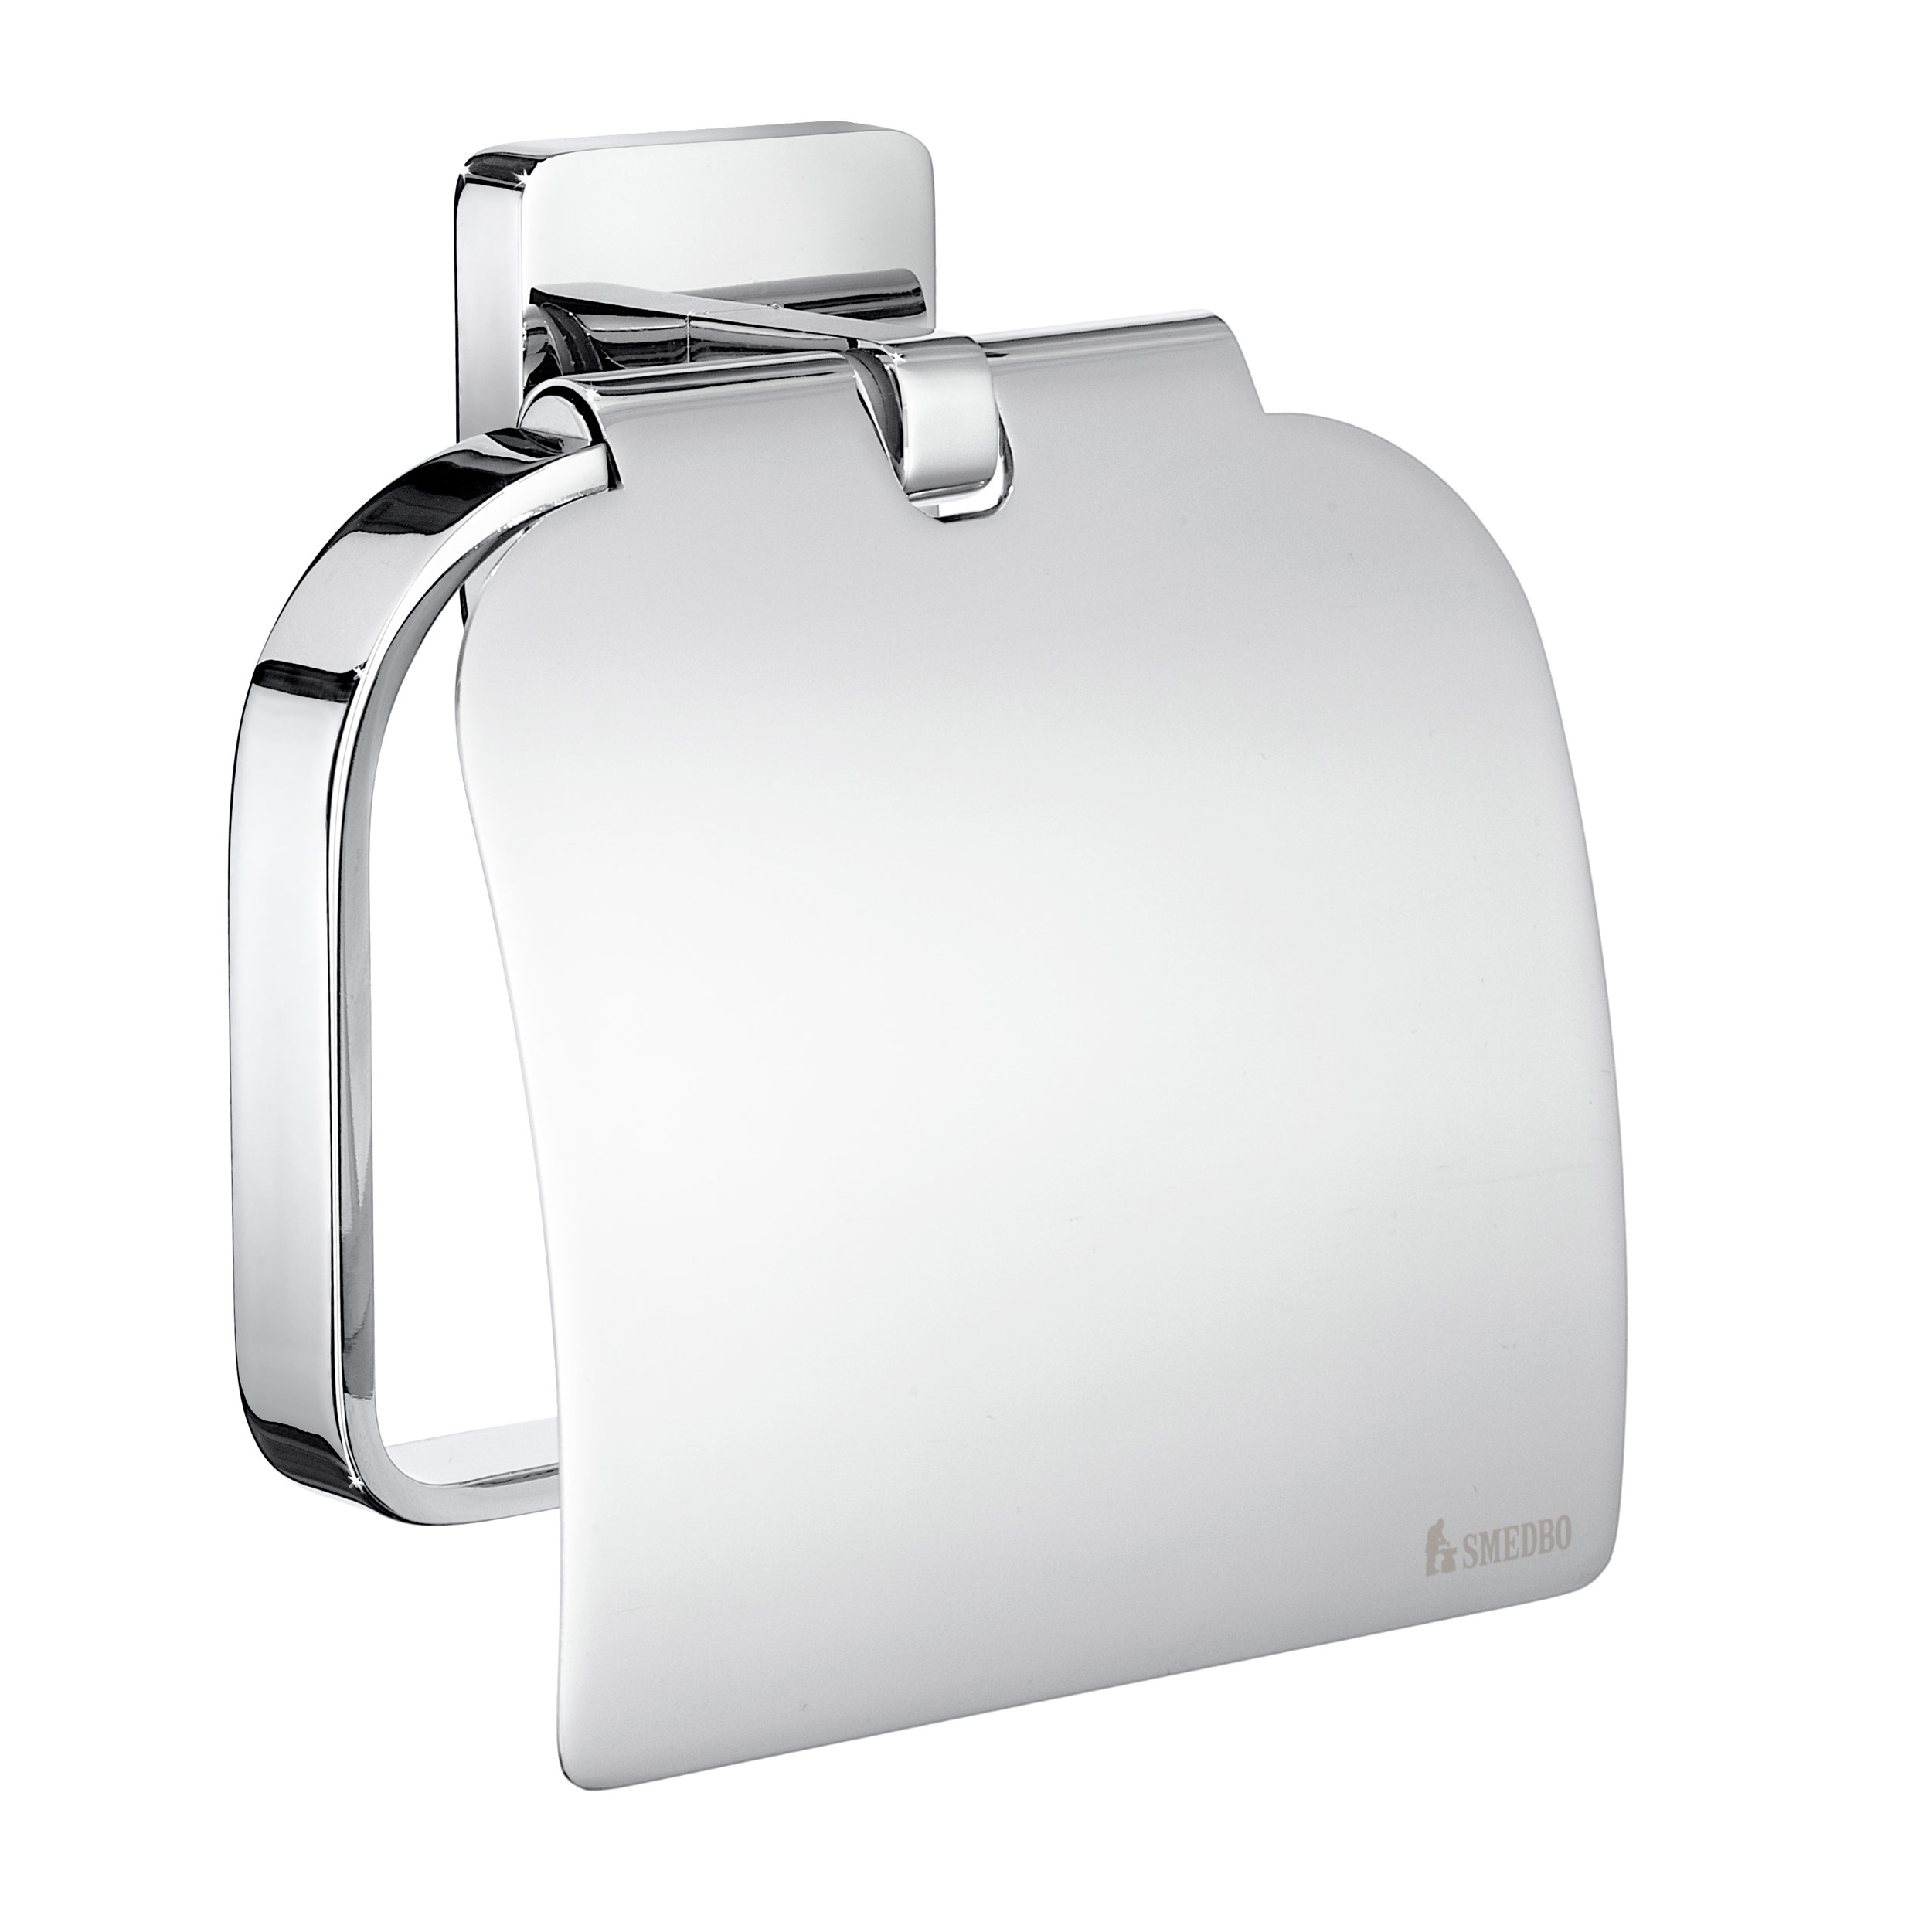 Smedbo ICE Toilettenpapierhalter mit Deckel 14x11cm (OK3414) chrom